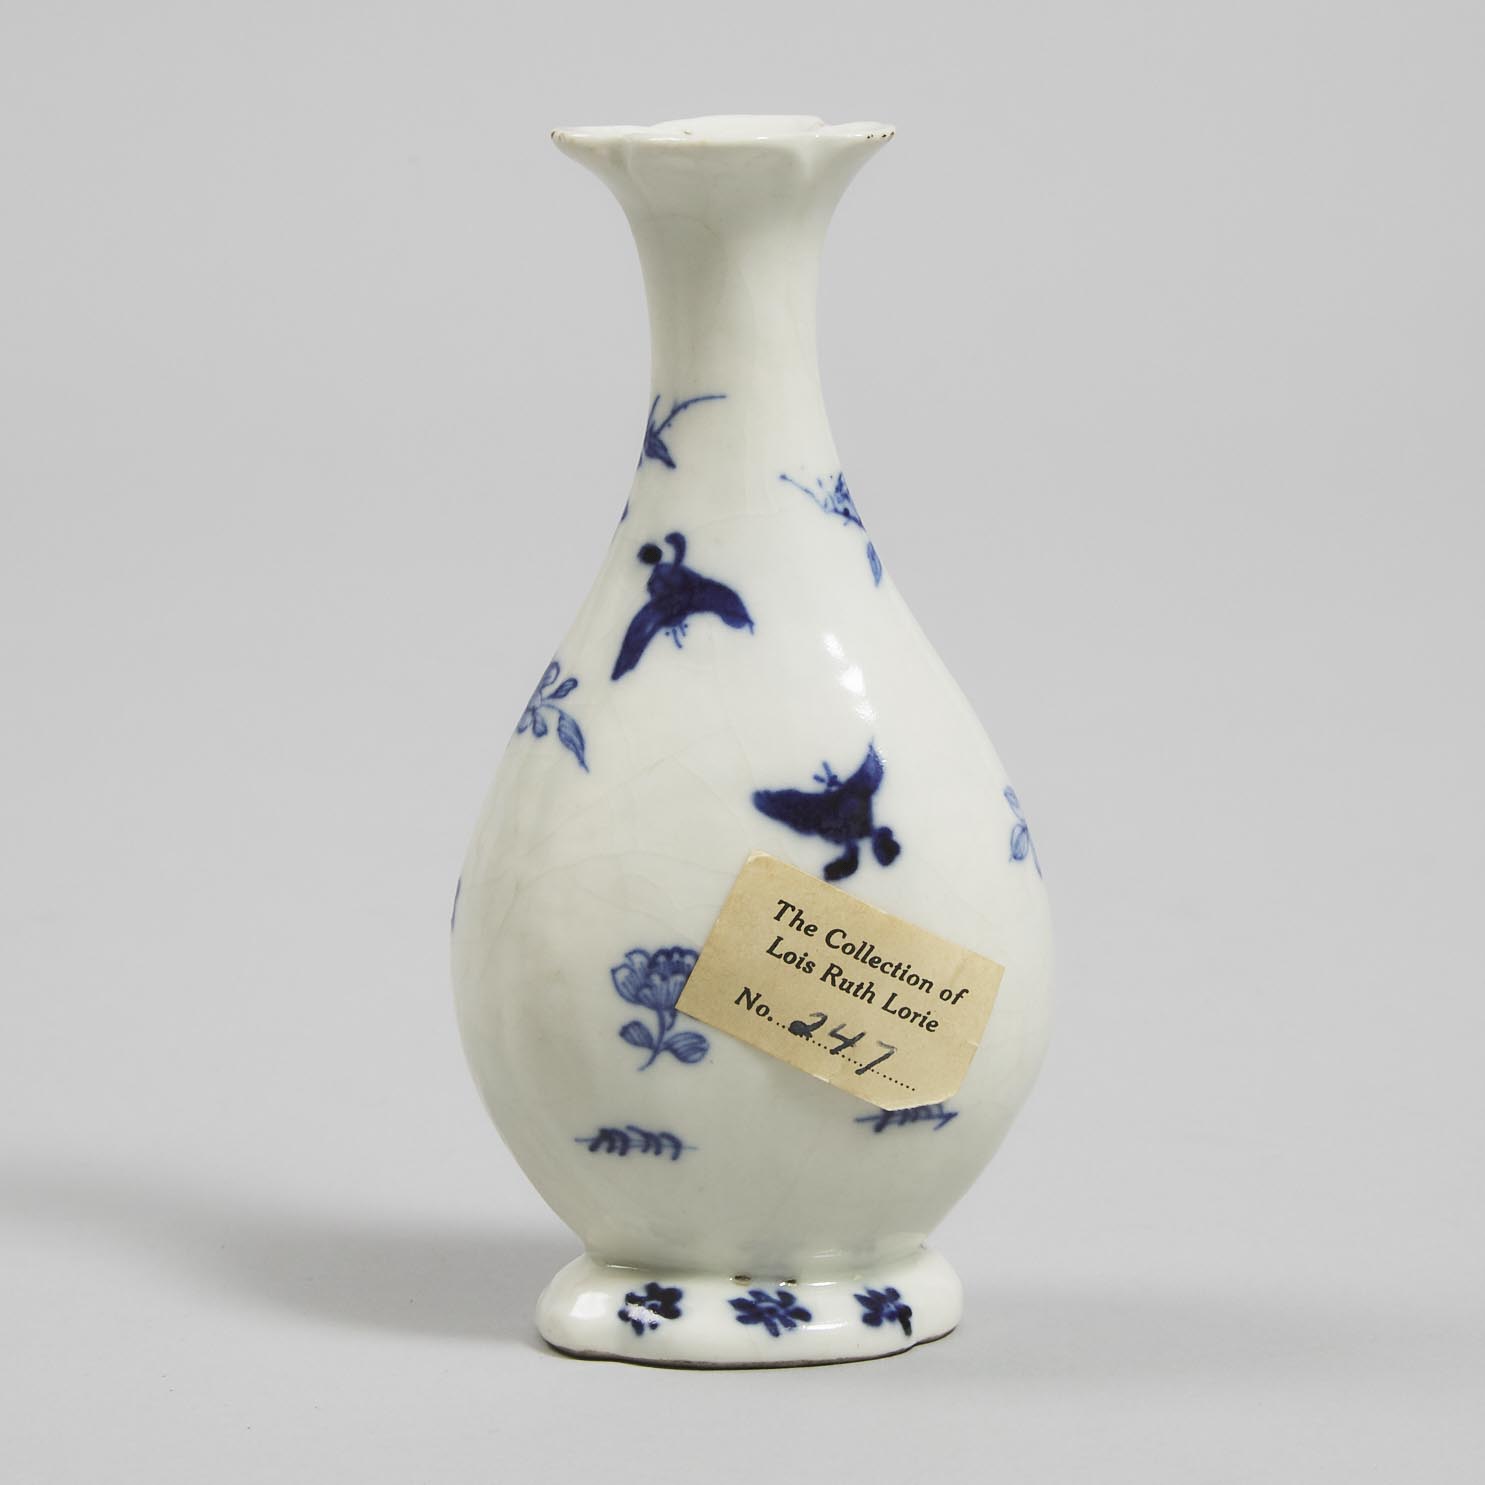 Chinese Blue and White Soft Paste Porcelain Huashi Ware Small Vase, 18th century
十八世纪早期 浆胎洞石花蝶纹小瓶